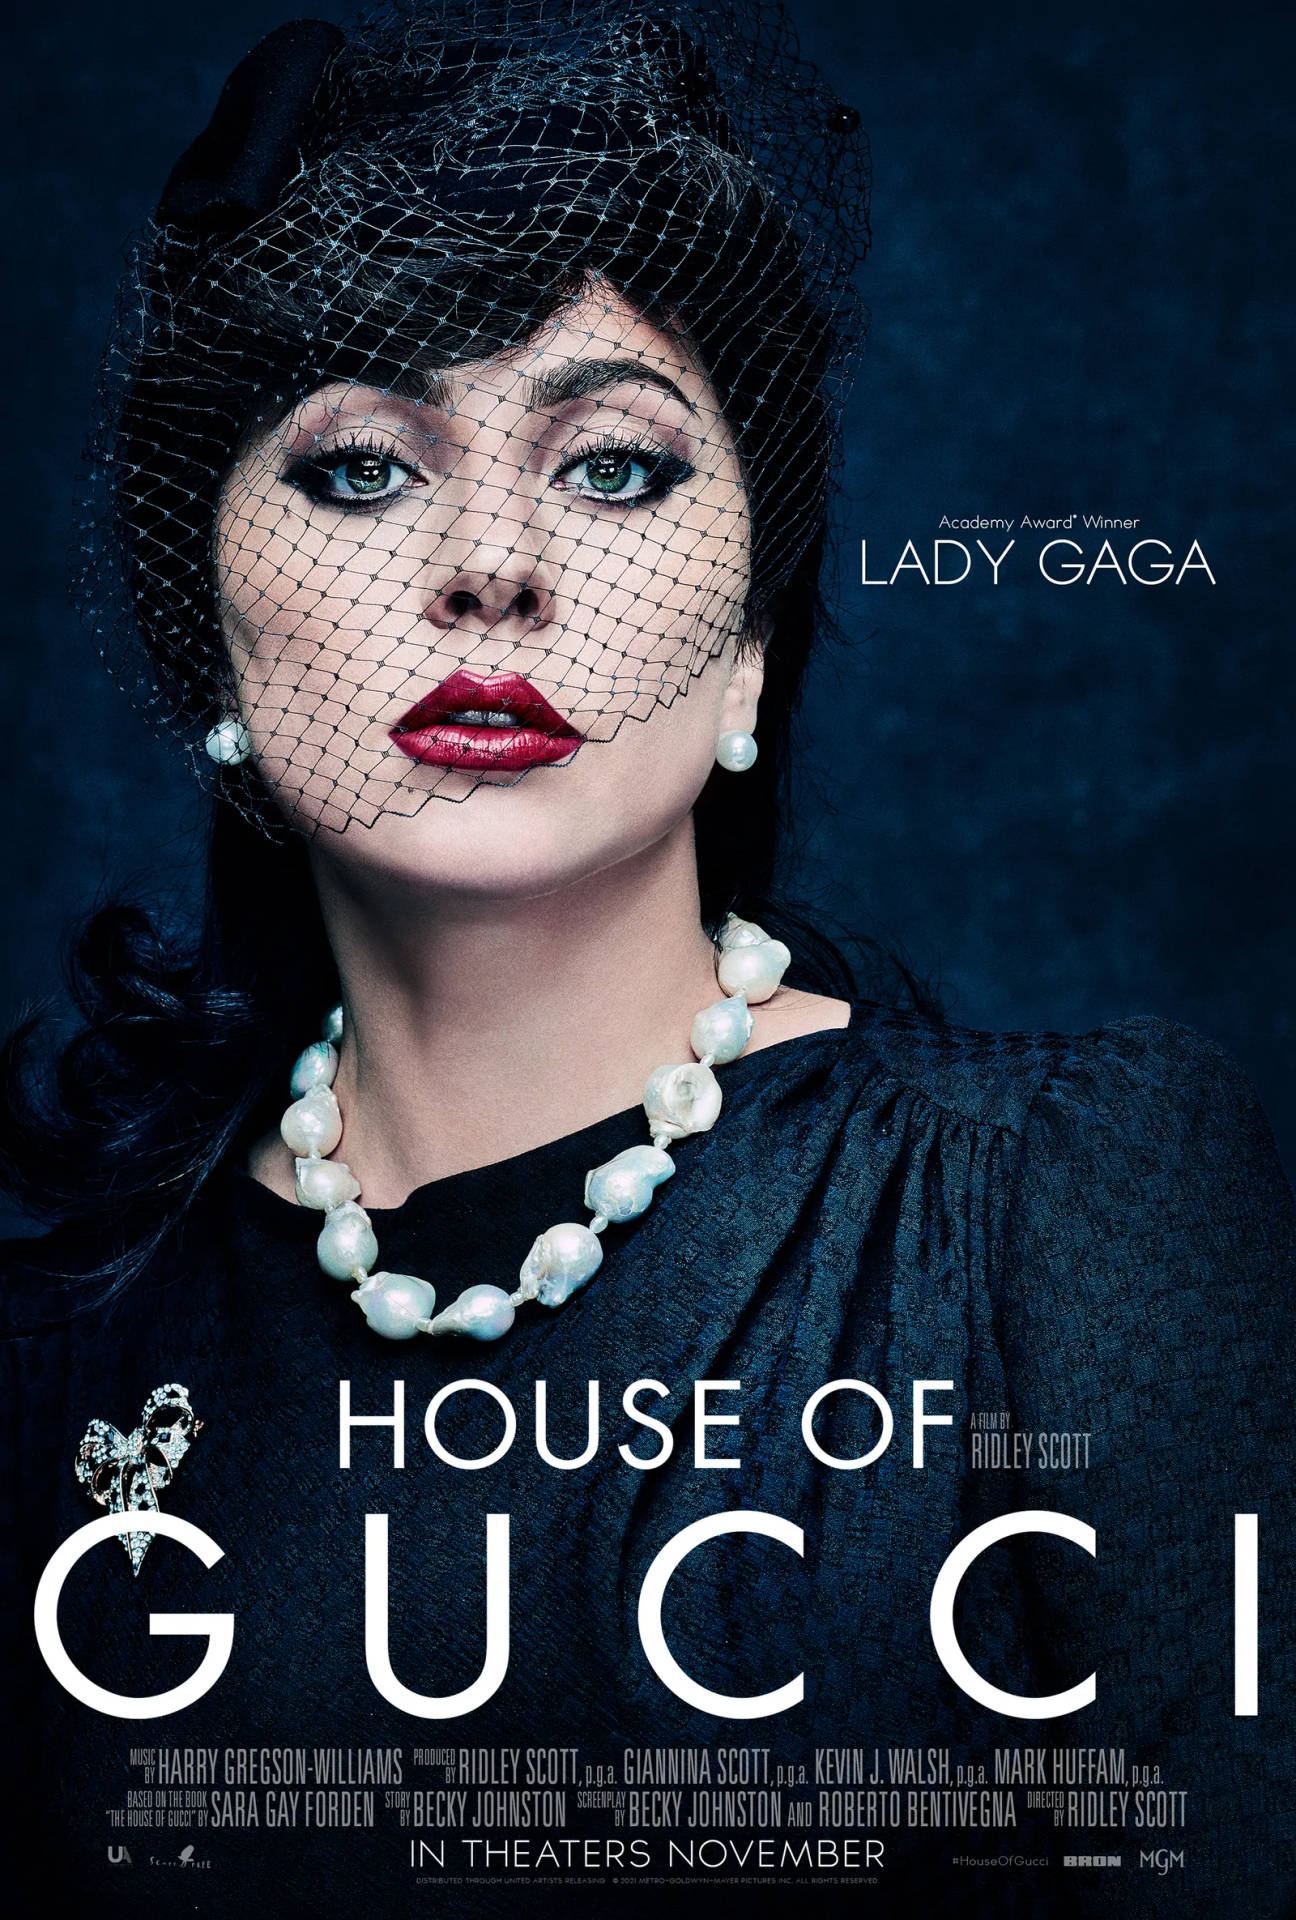 Hausvon Gucci Lady Gaga Poster Wallpaper